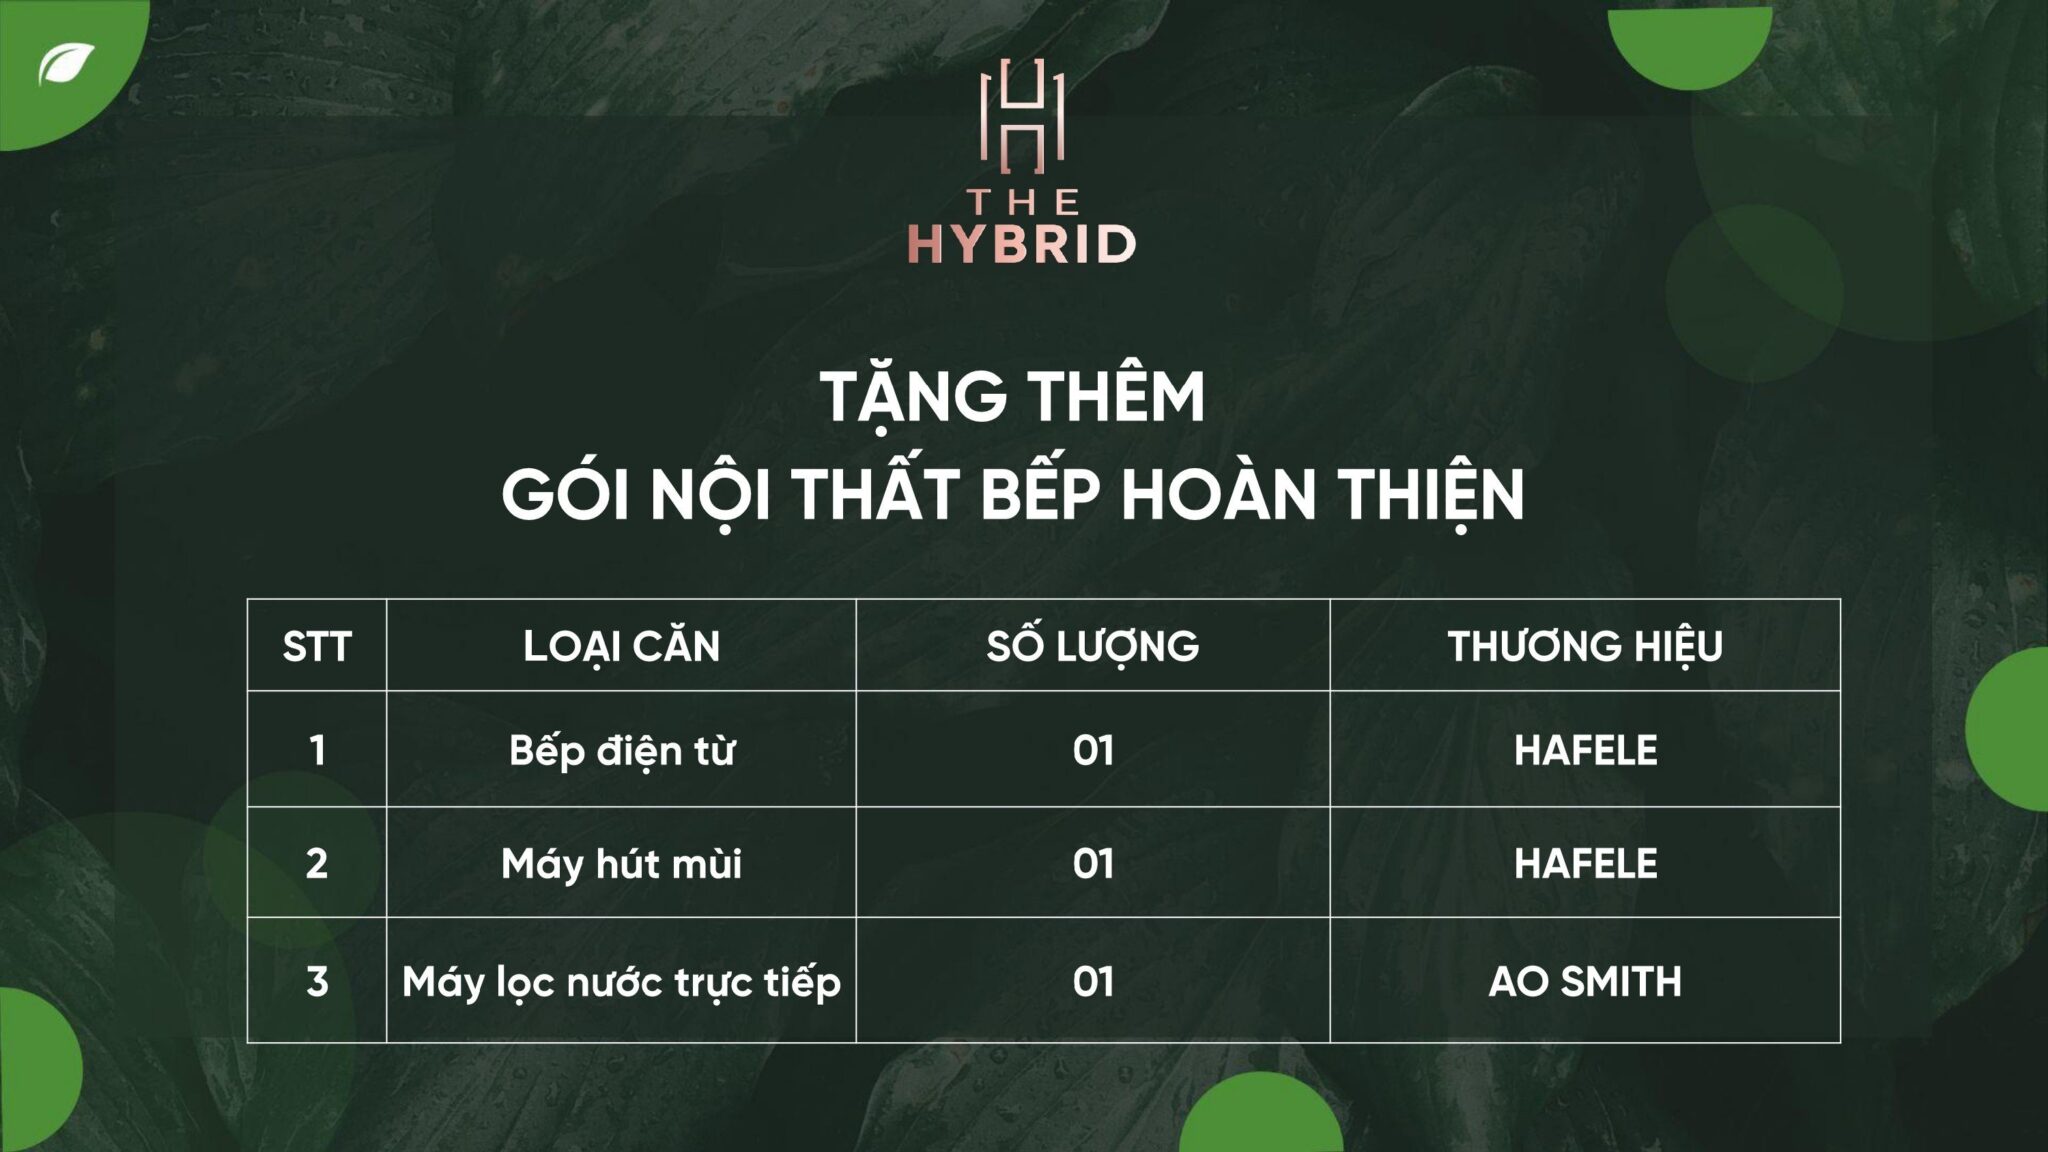 The Hybrid tang noi that